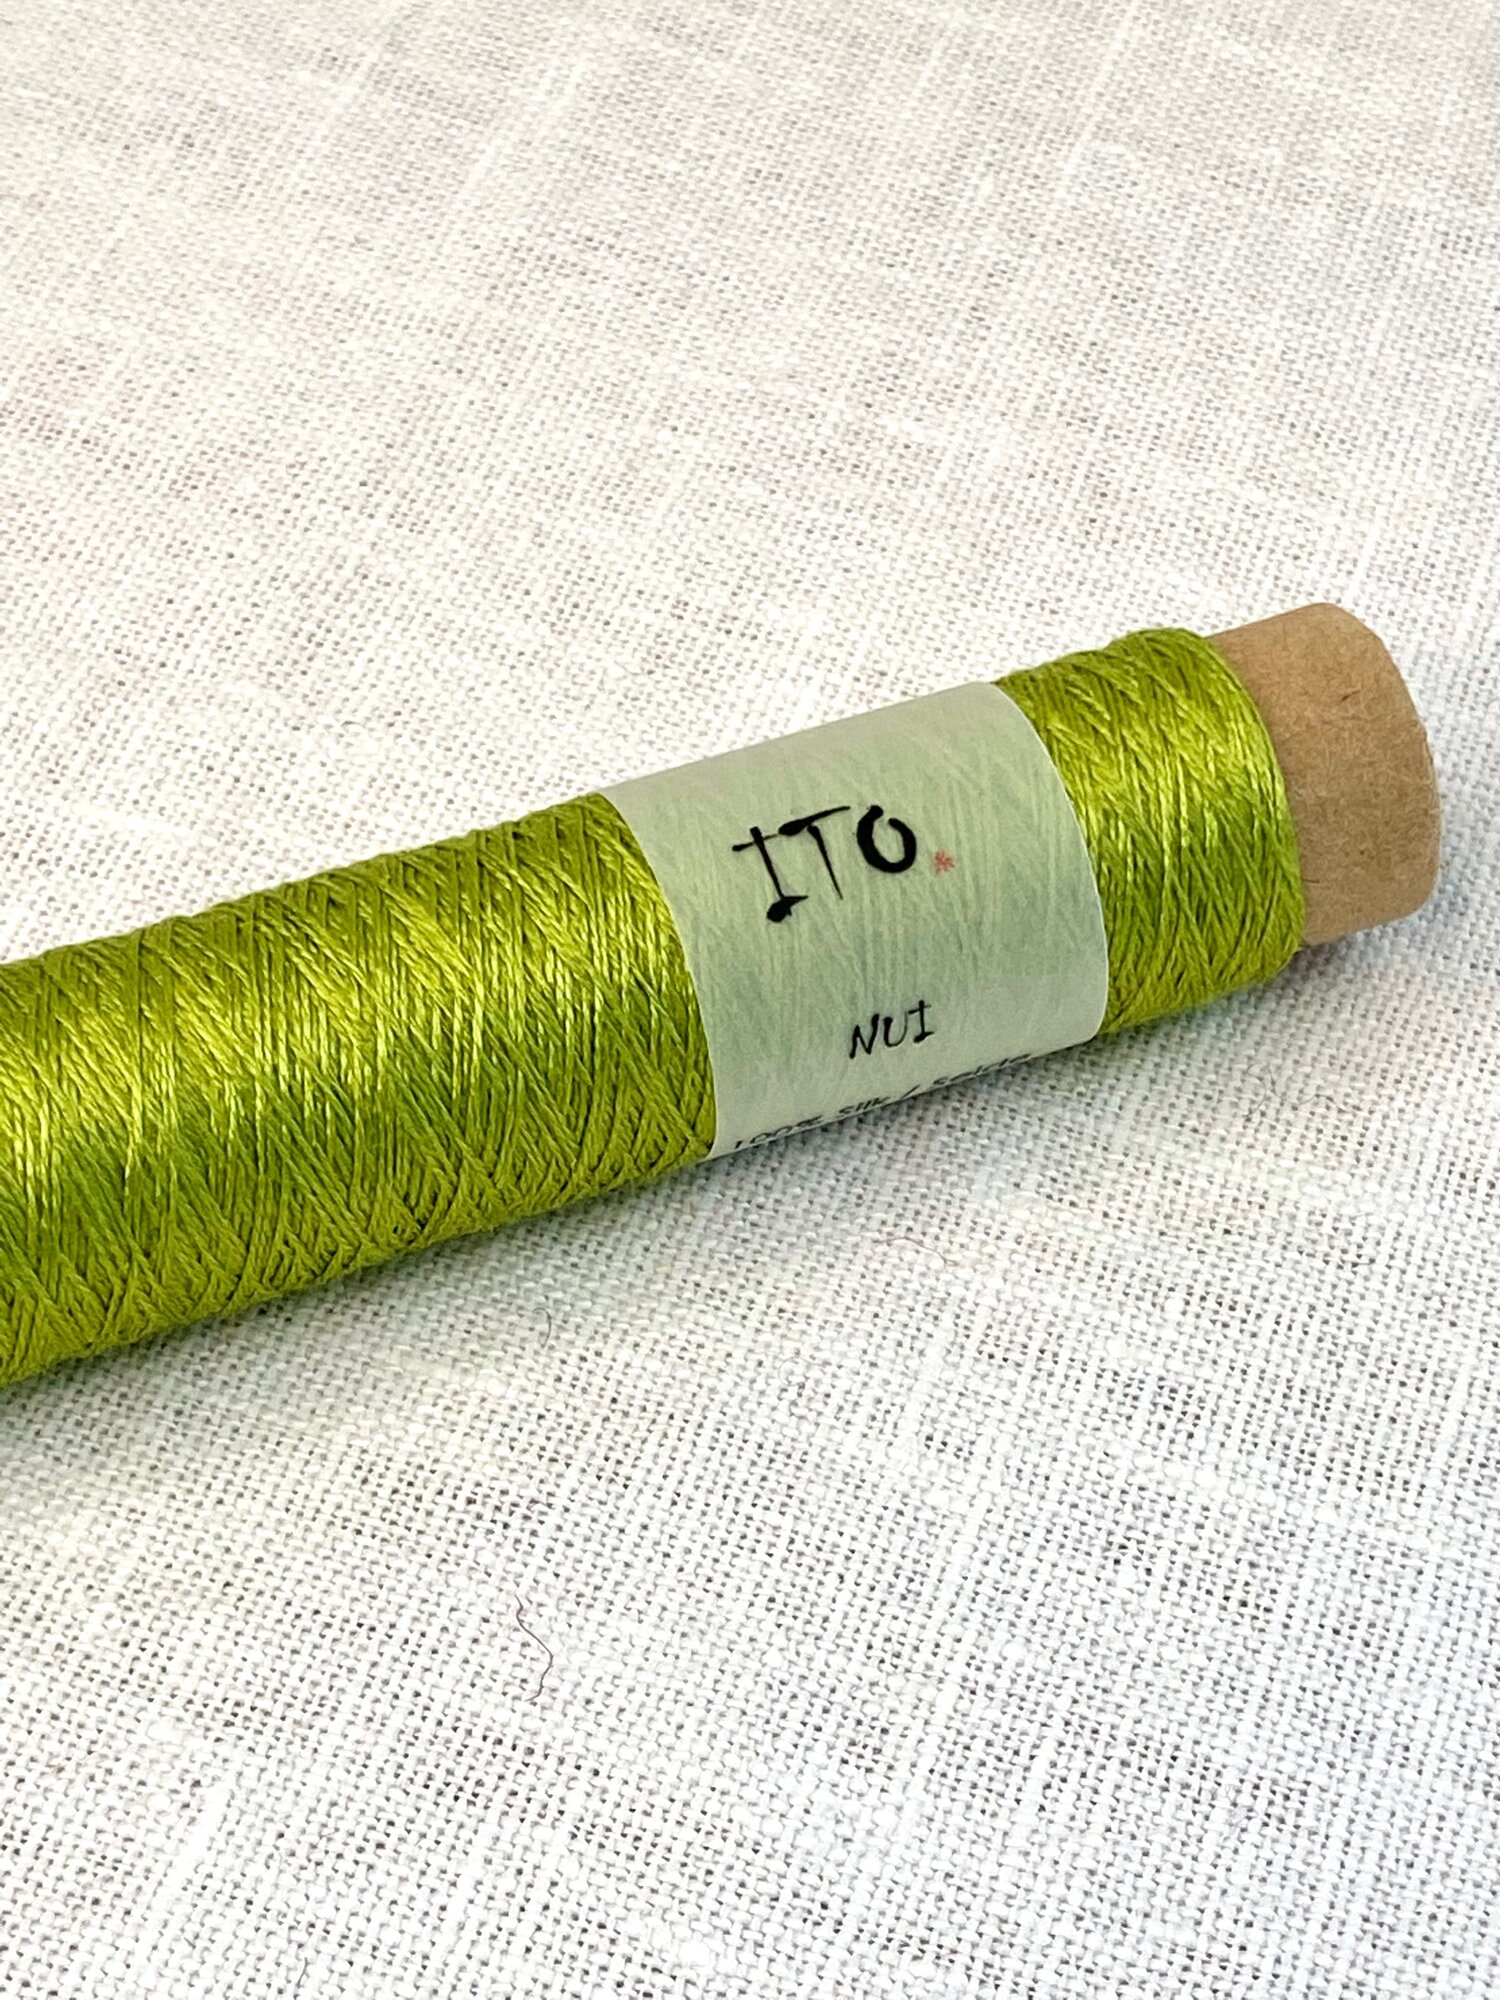 Twisted Metallic Embroidery Thread